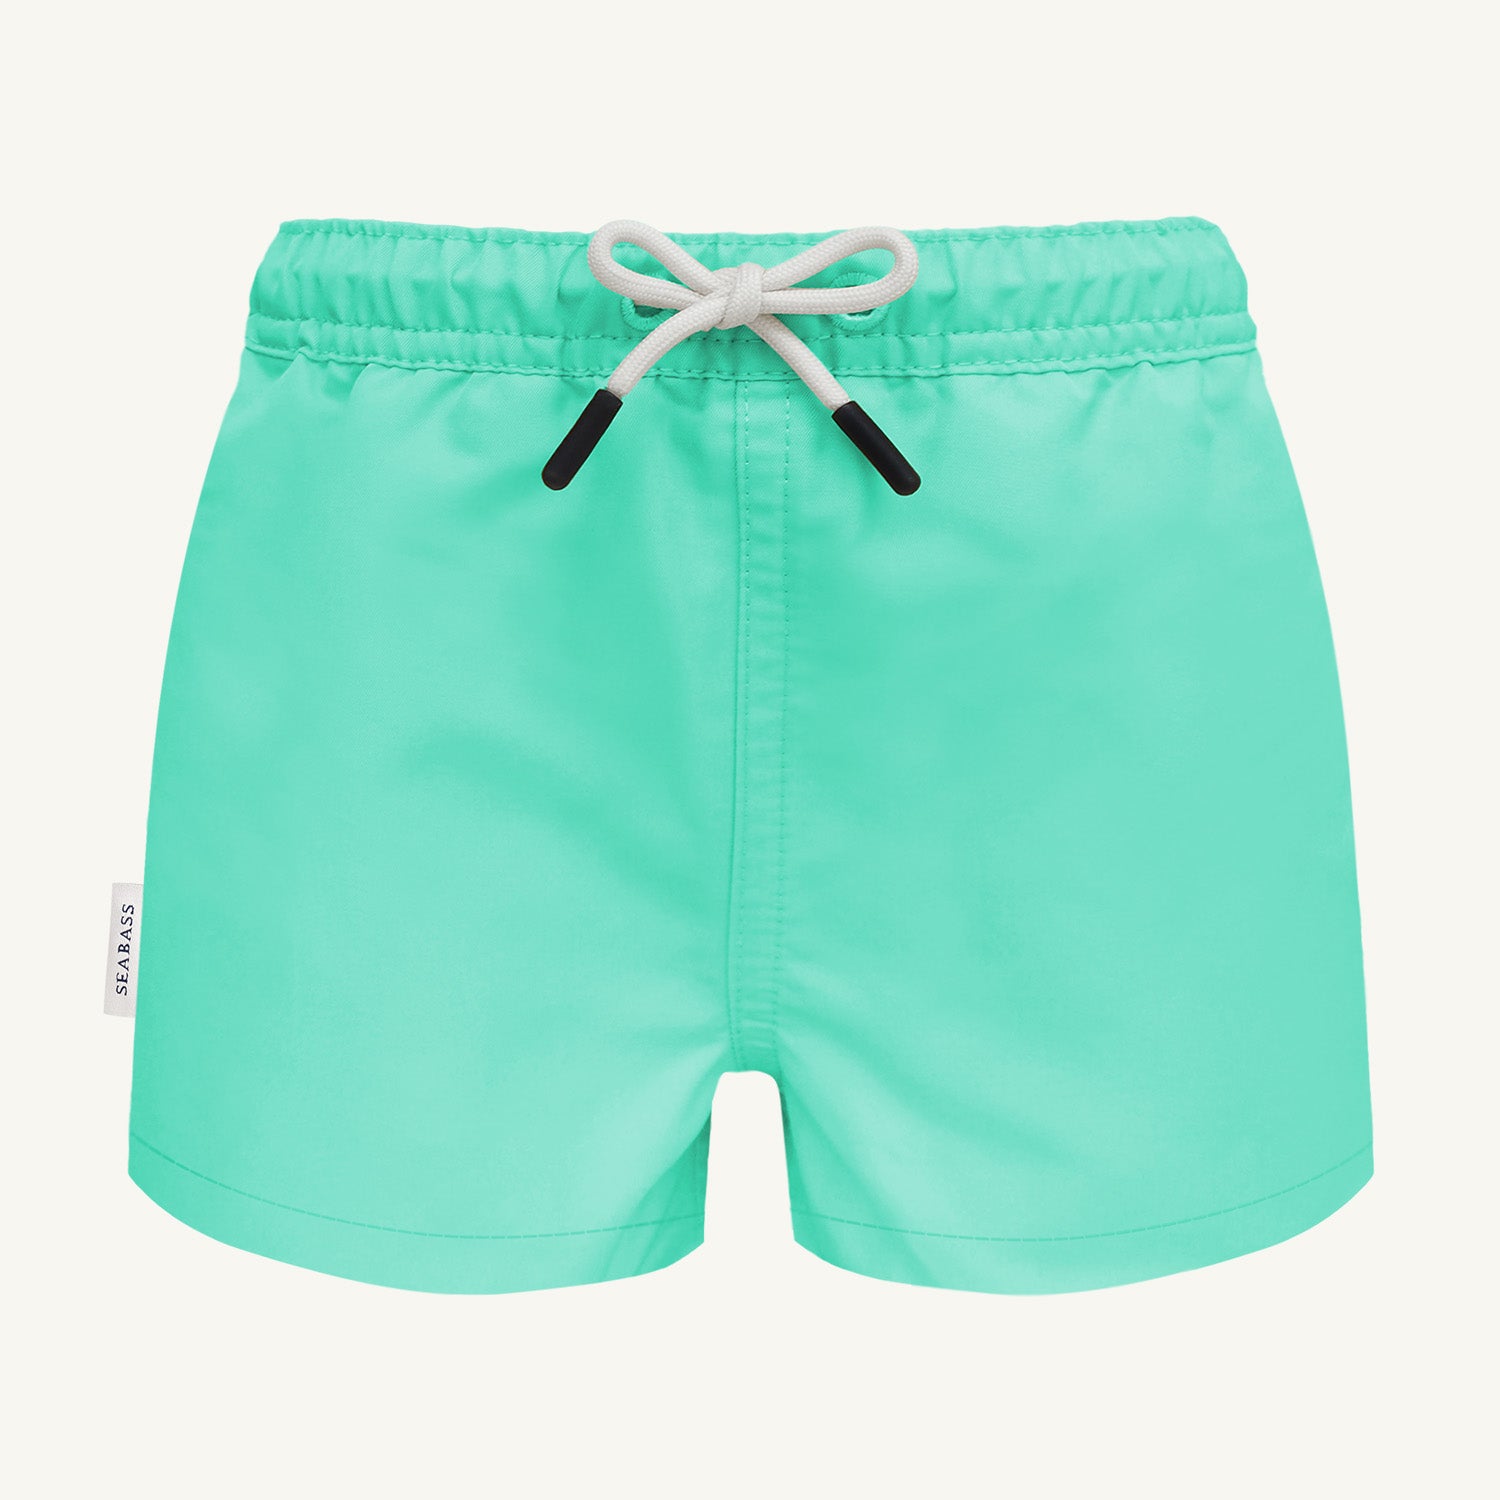 Jungs UV Badeshort Mintgrün - einfarbig